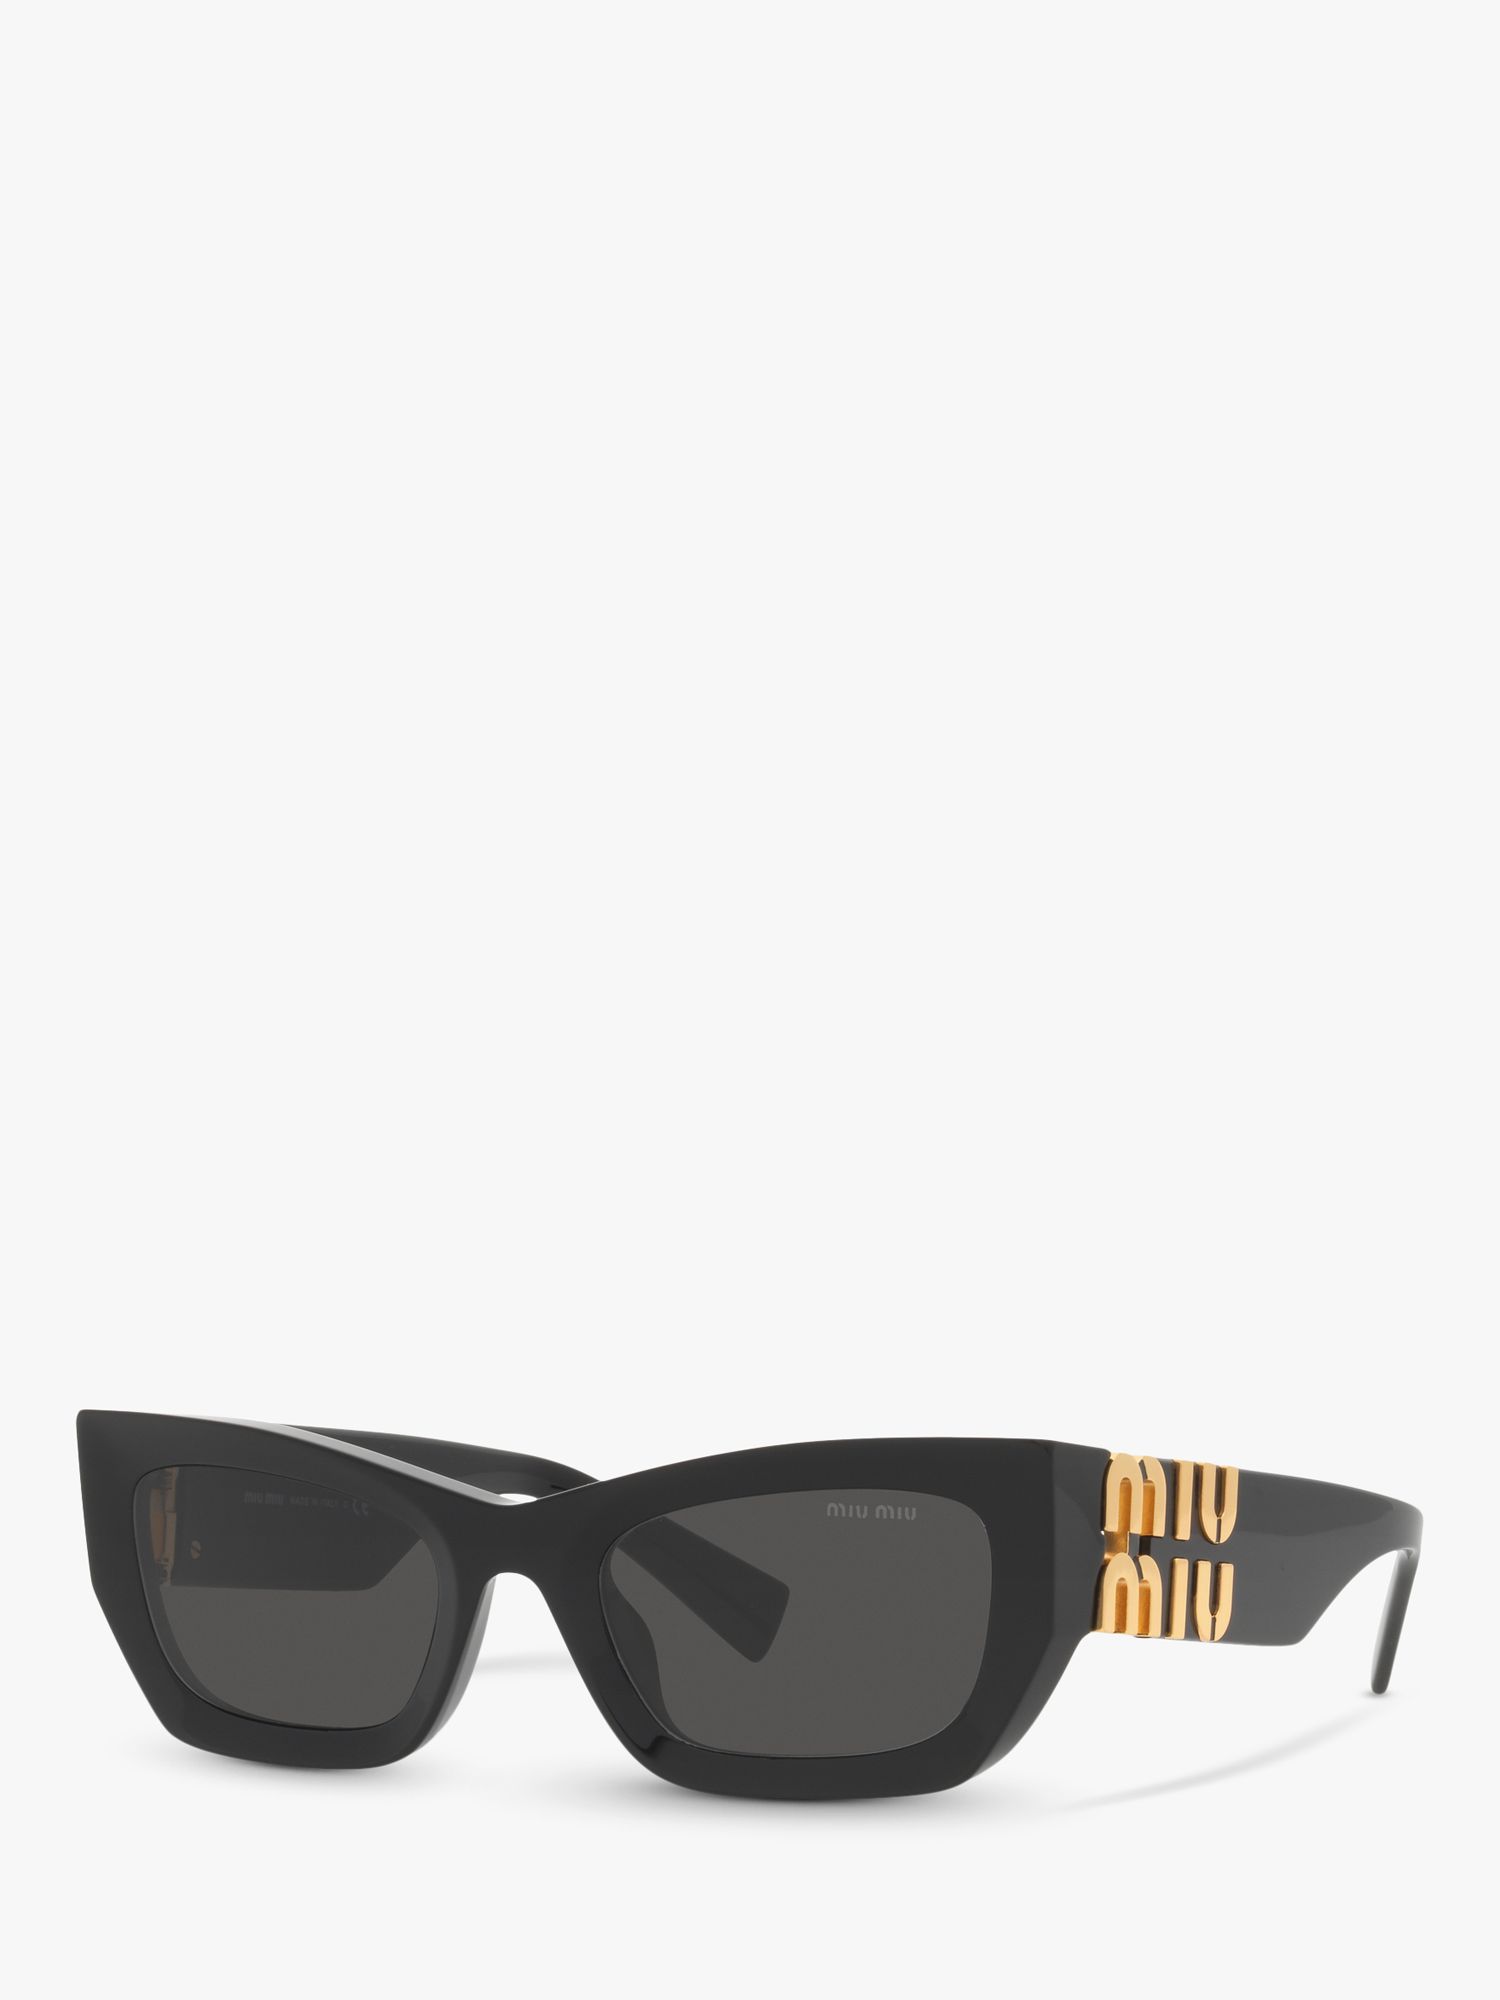 Miu Miu Mu 09ws Womens Rectangular Sunglasses Blackgrey At John Lewis And Partners 